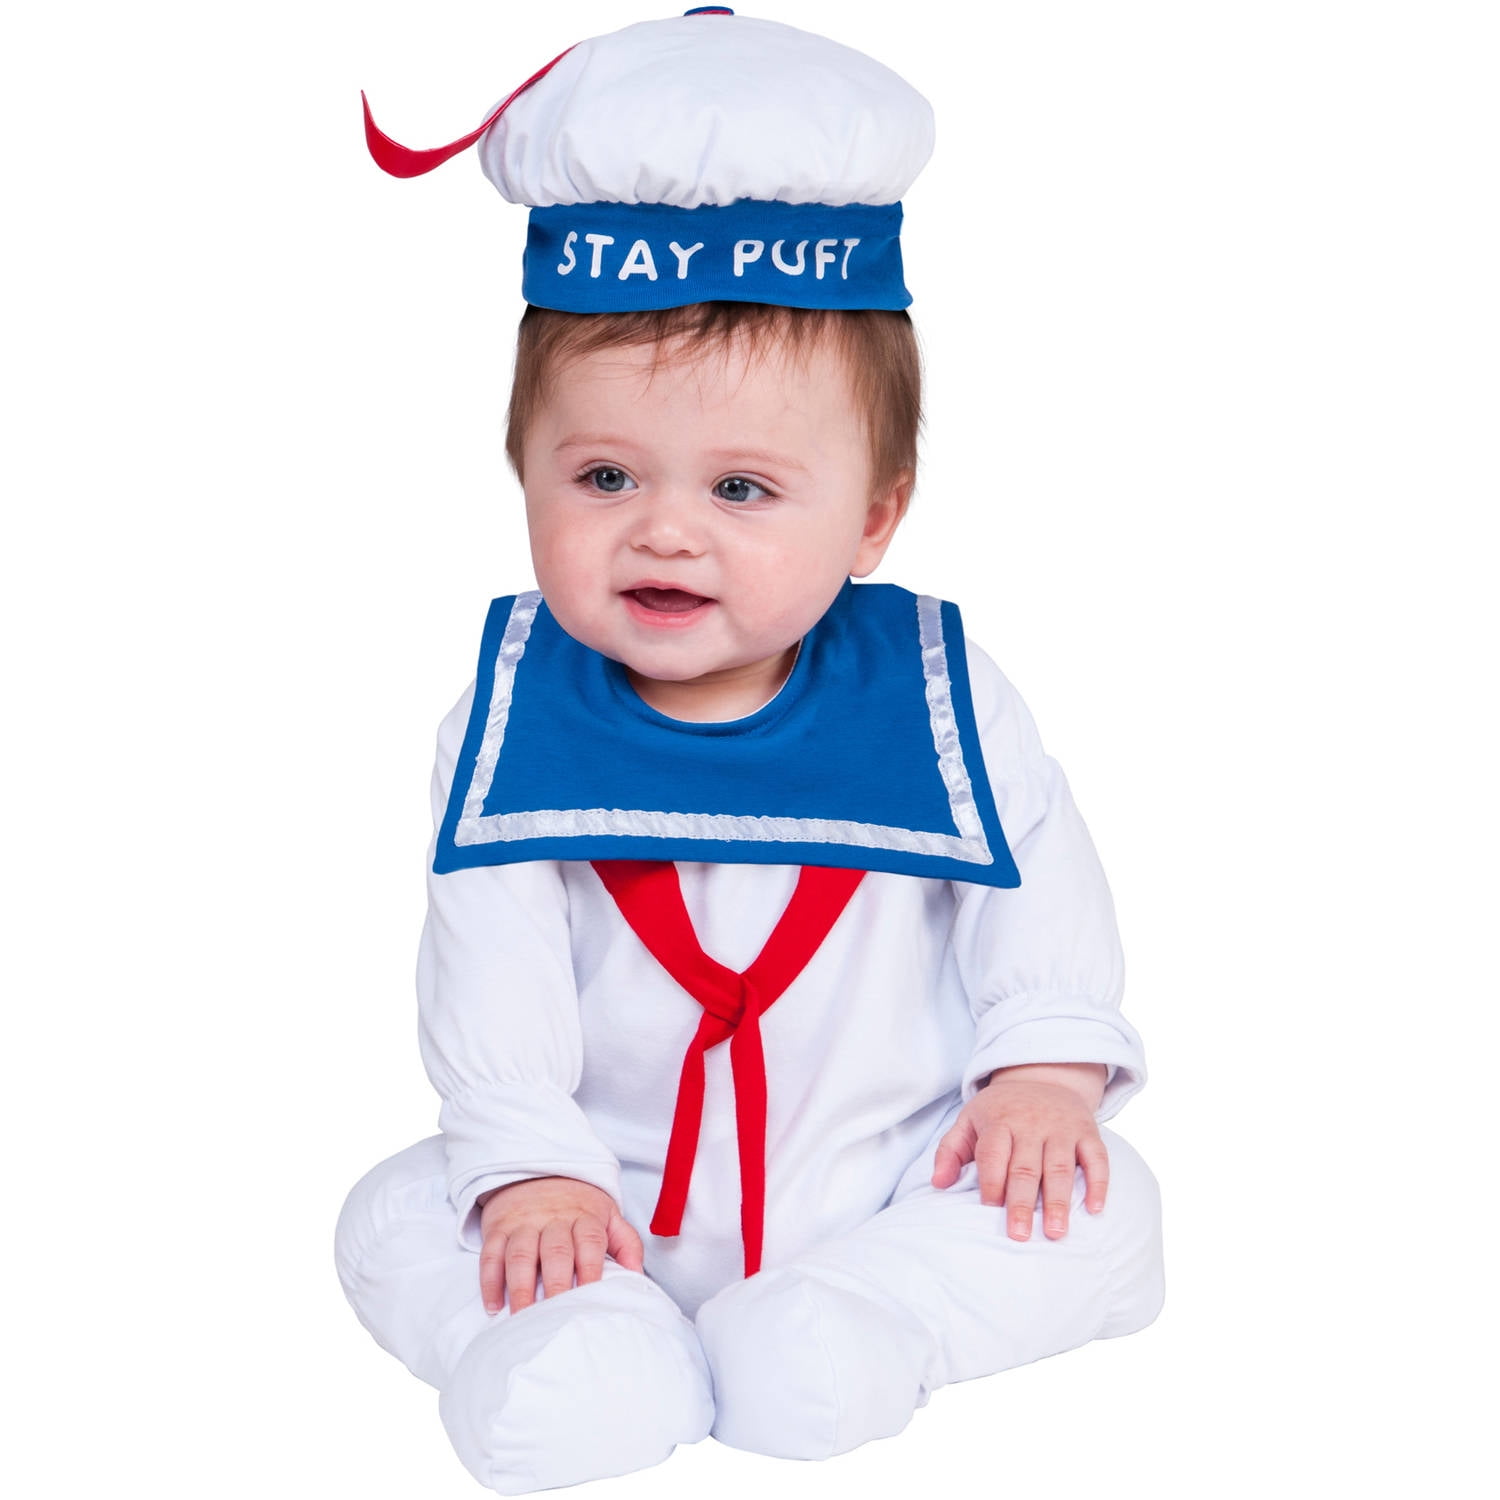 Stay Puft Onesie Baby Halloween Costume